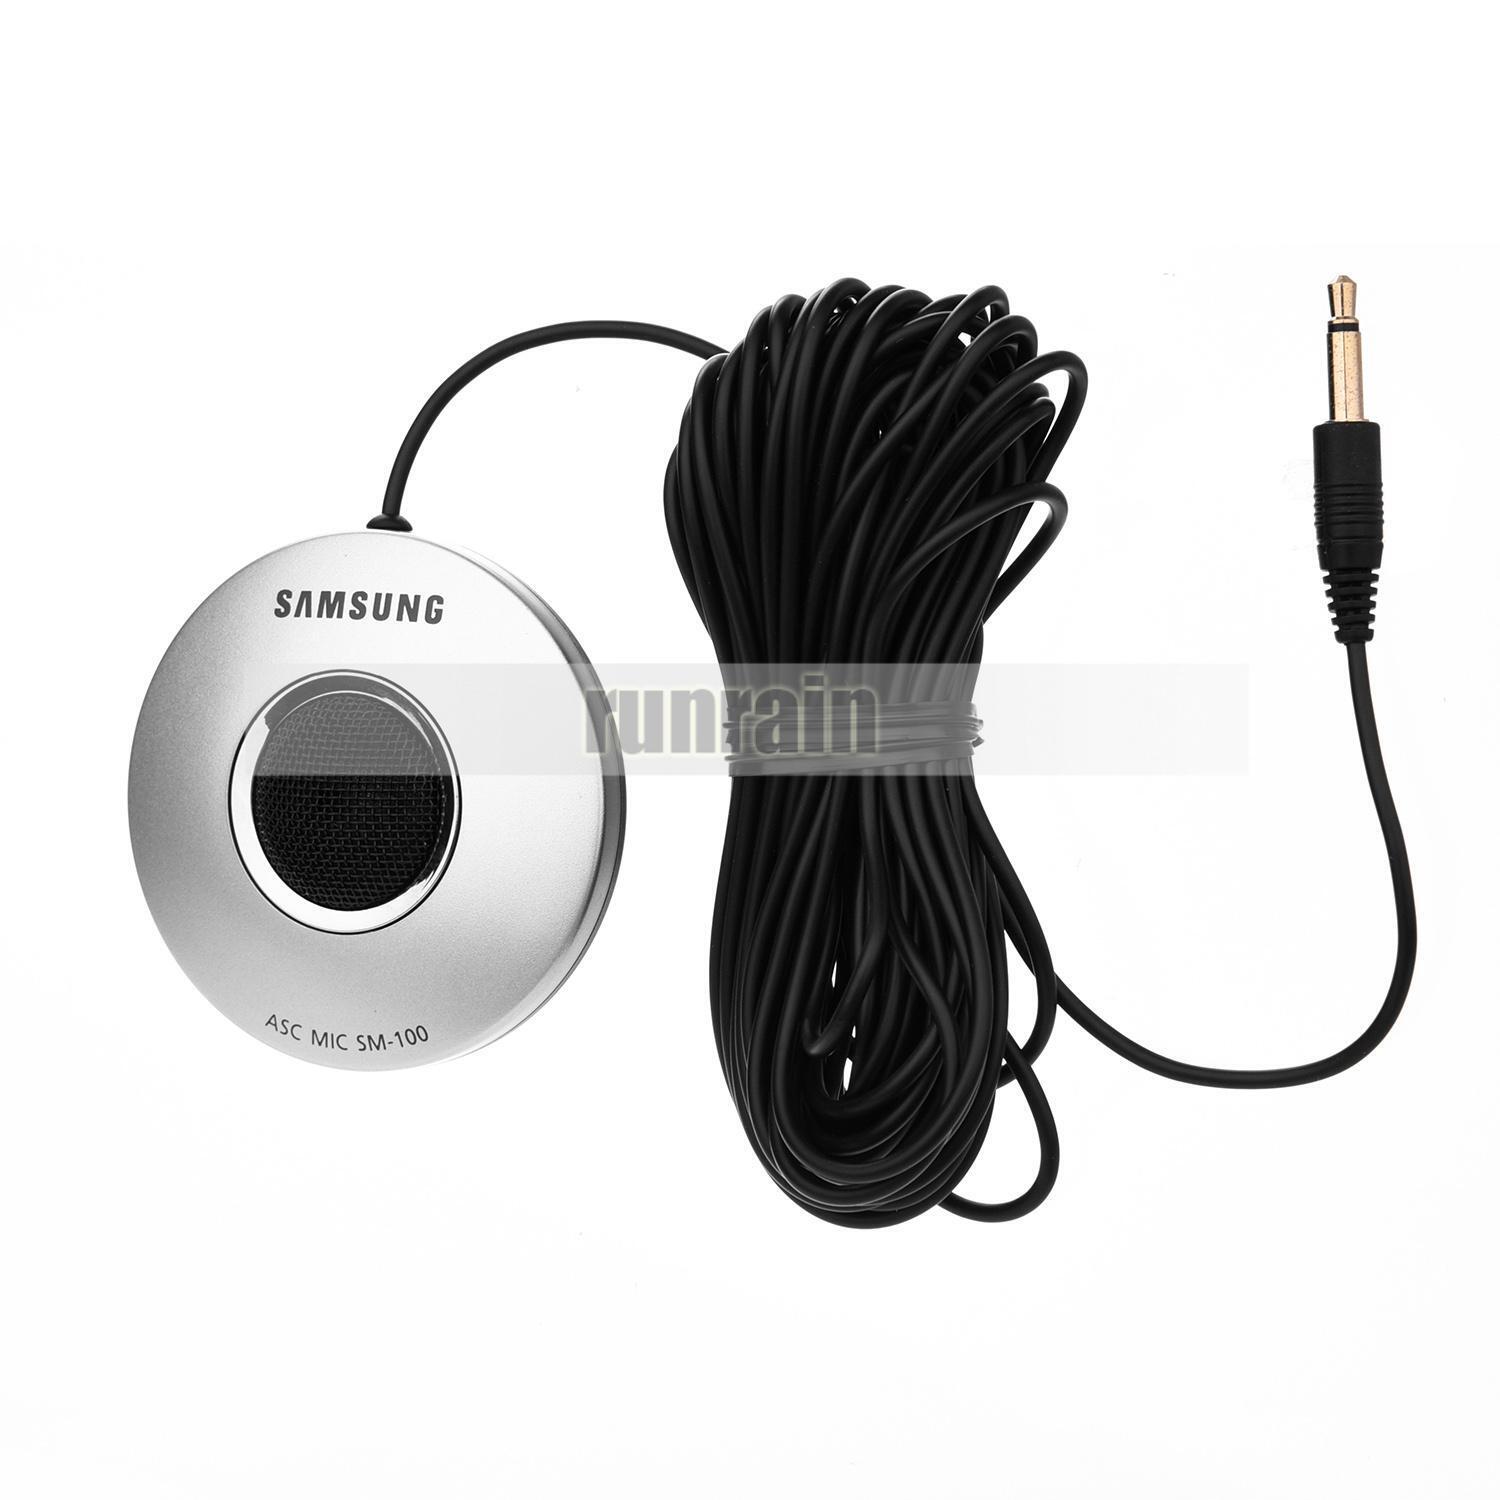 New Samsung Calibration Omnidirectional Auto Setup ASC Microphone Home Receiver Brand Samsung Colour Silver Compatible